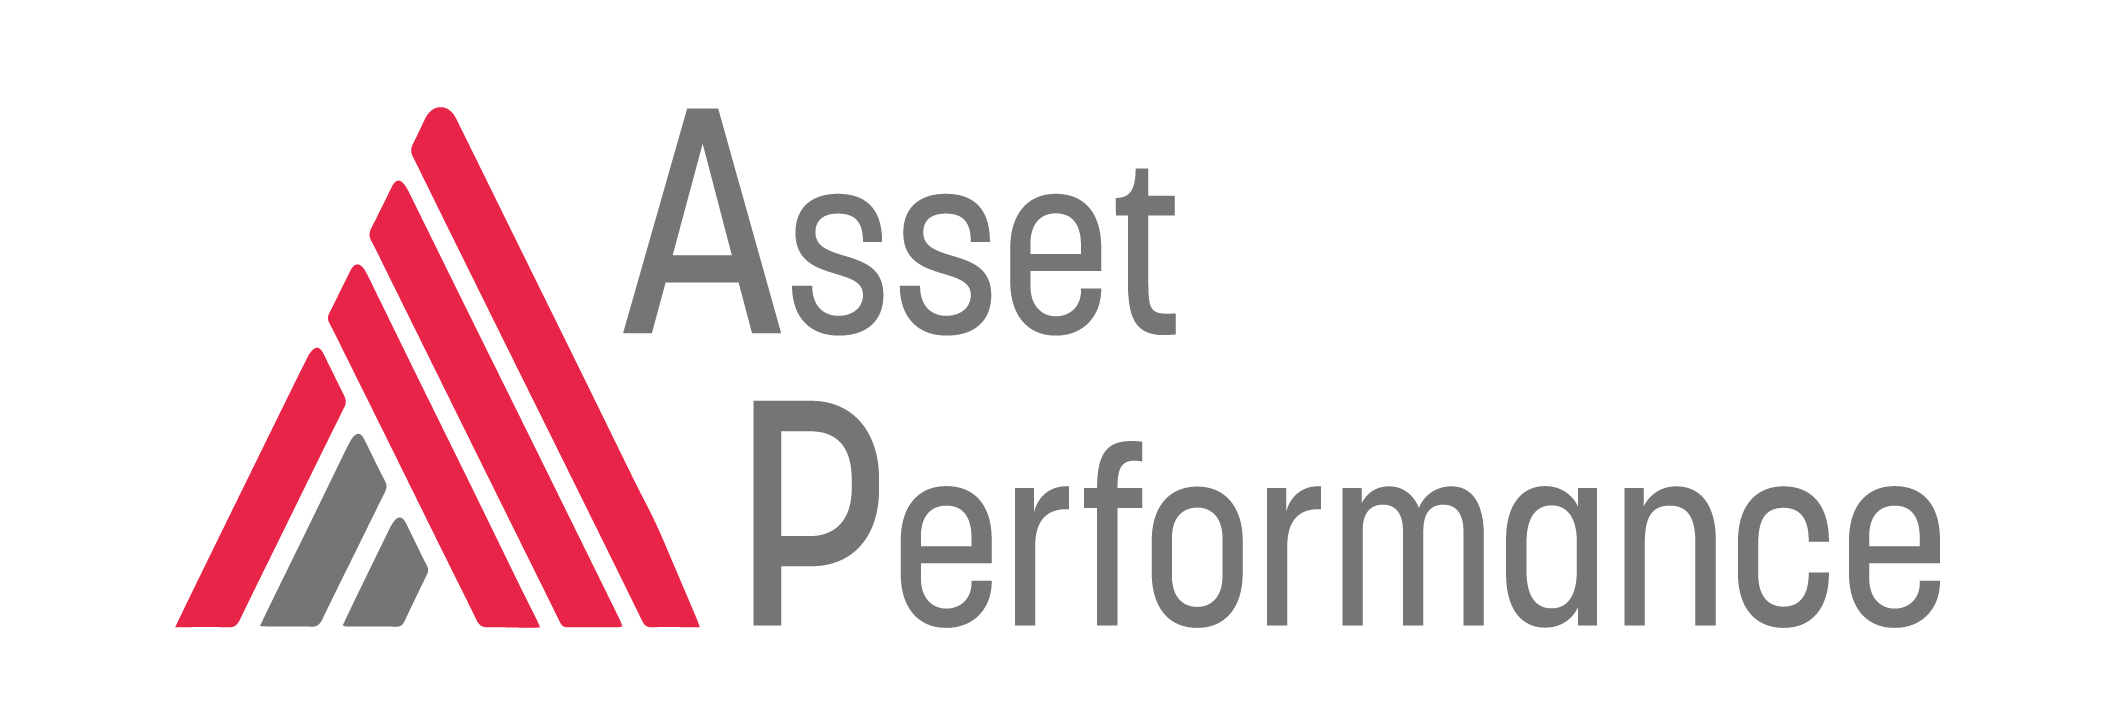 Asset Performance 4.0